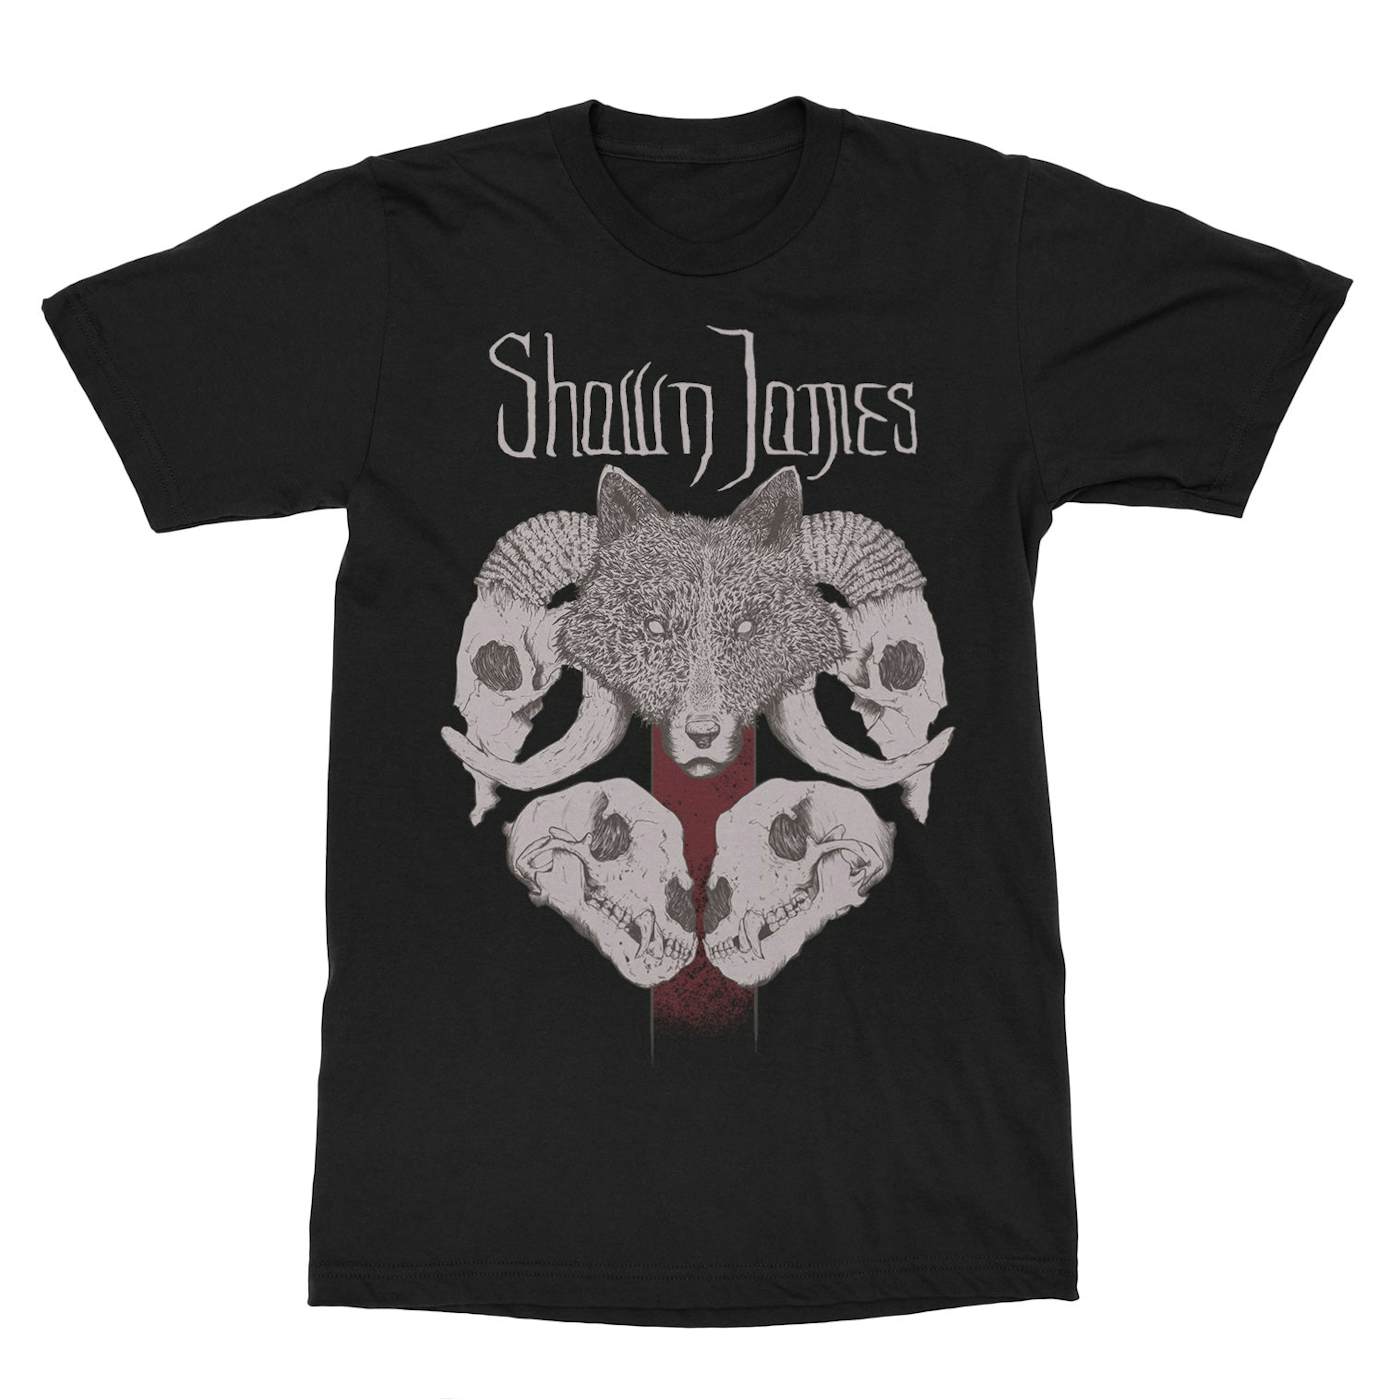 Shawn James "Wolf Skull" T-Shirt